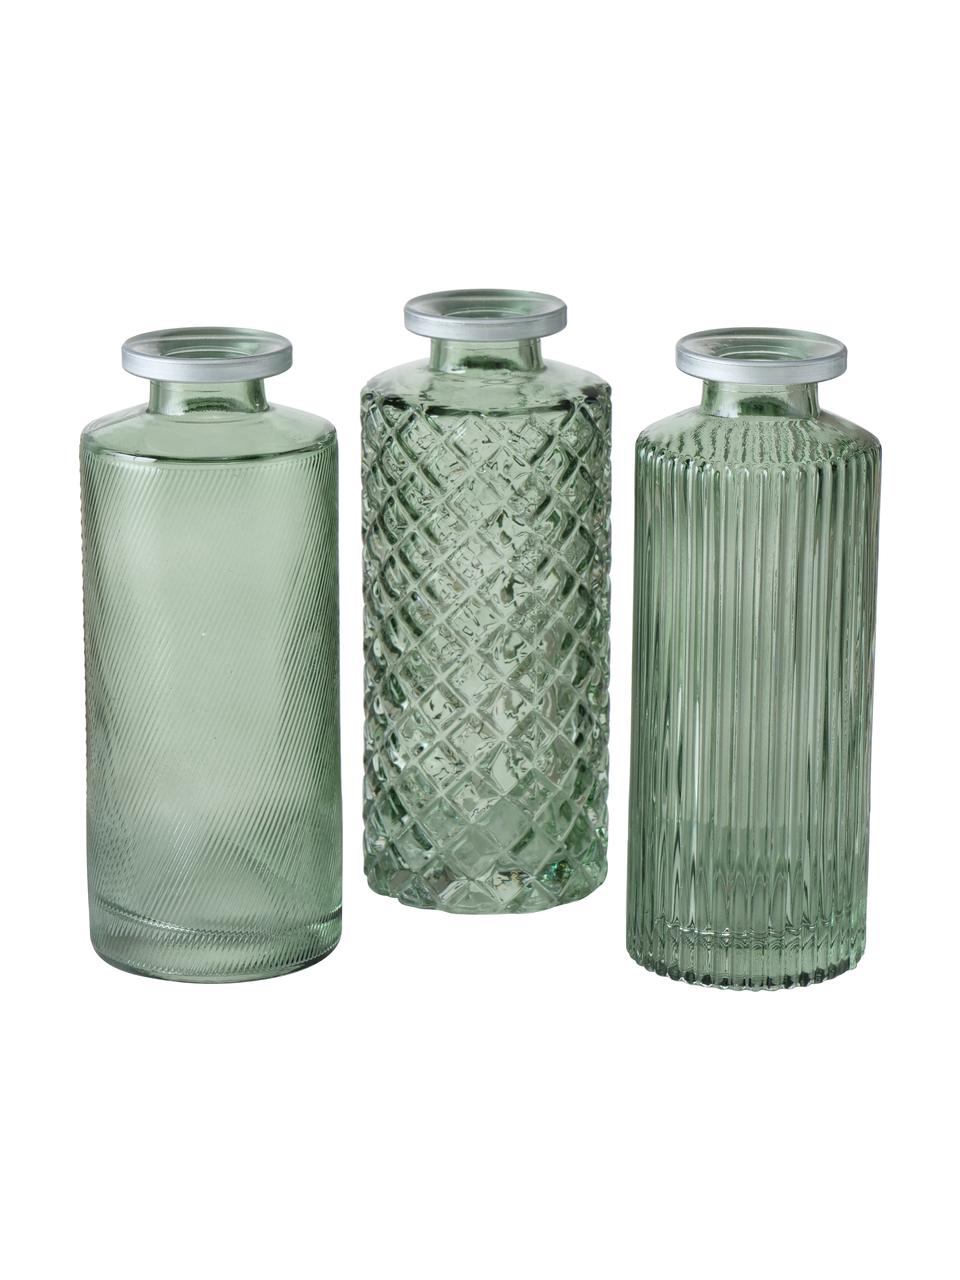 Kleine vazenset Adore van glas in groen, 3-delig, Glas, geverfd, Groen, transparant, Ø 5 x H 13 cm